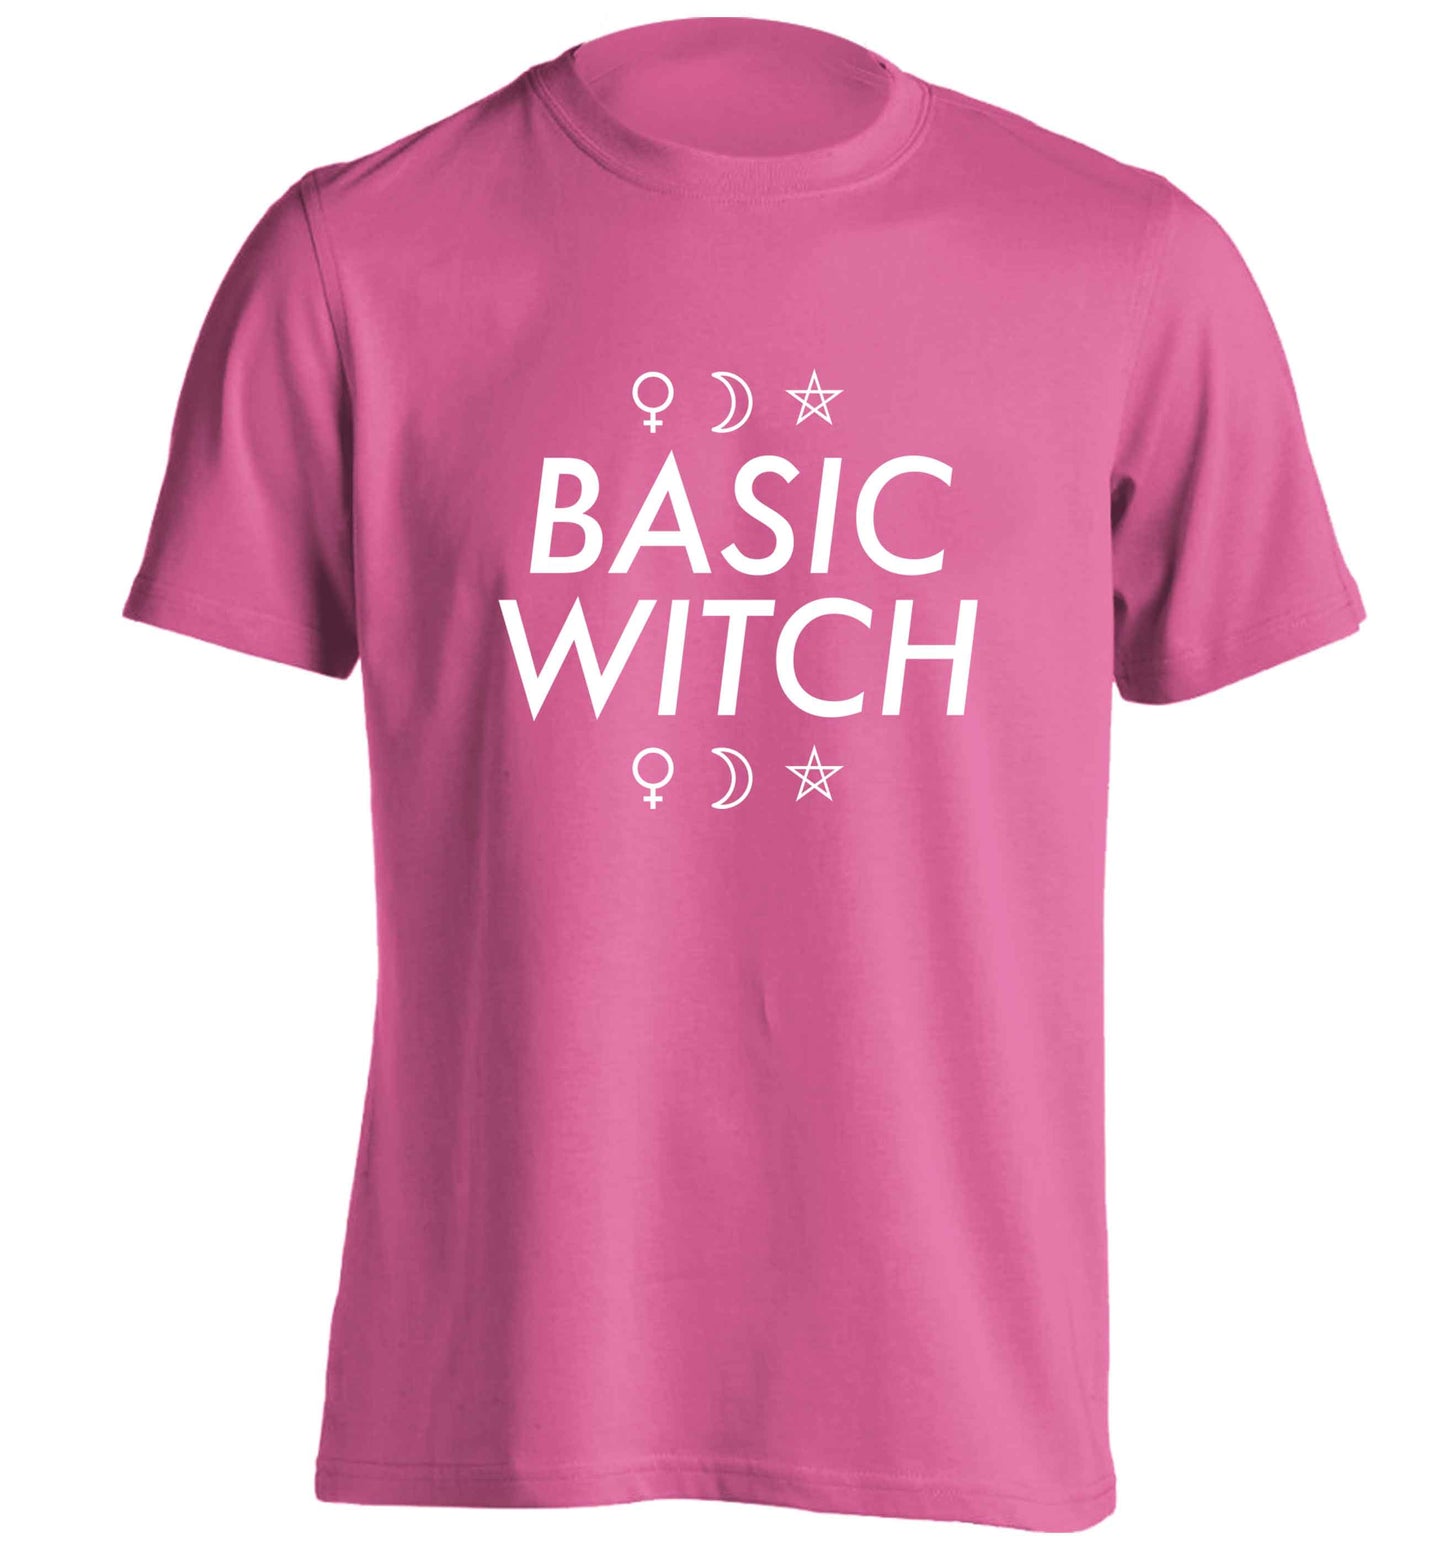 Basic witch 1 adults unisex pink Tshirt 2XL